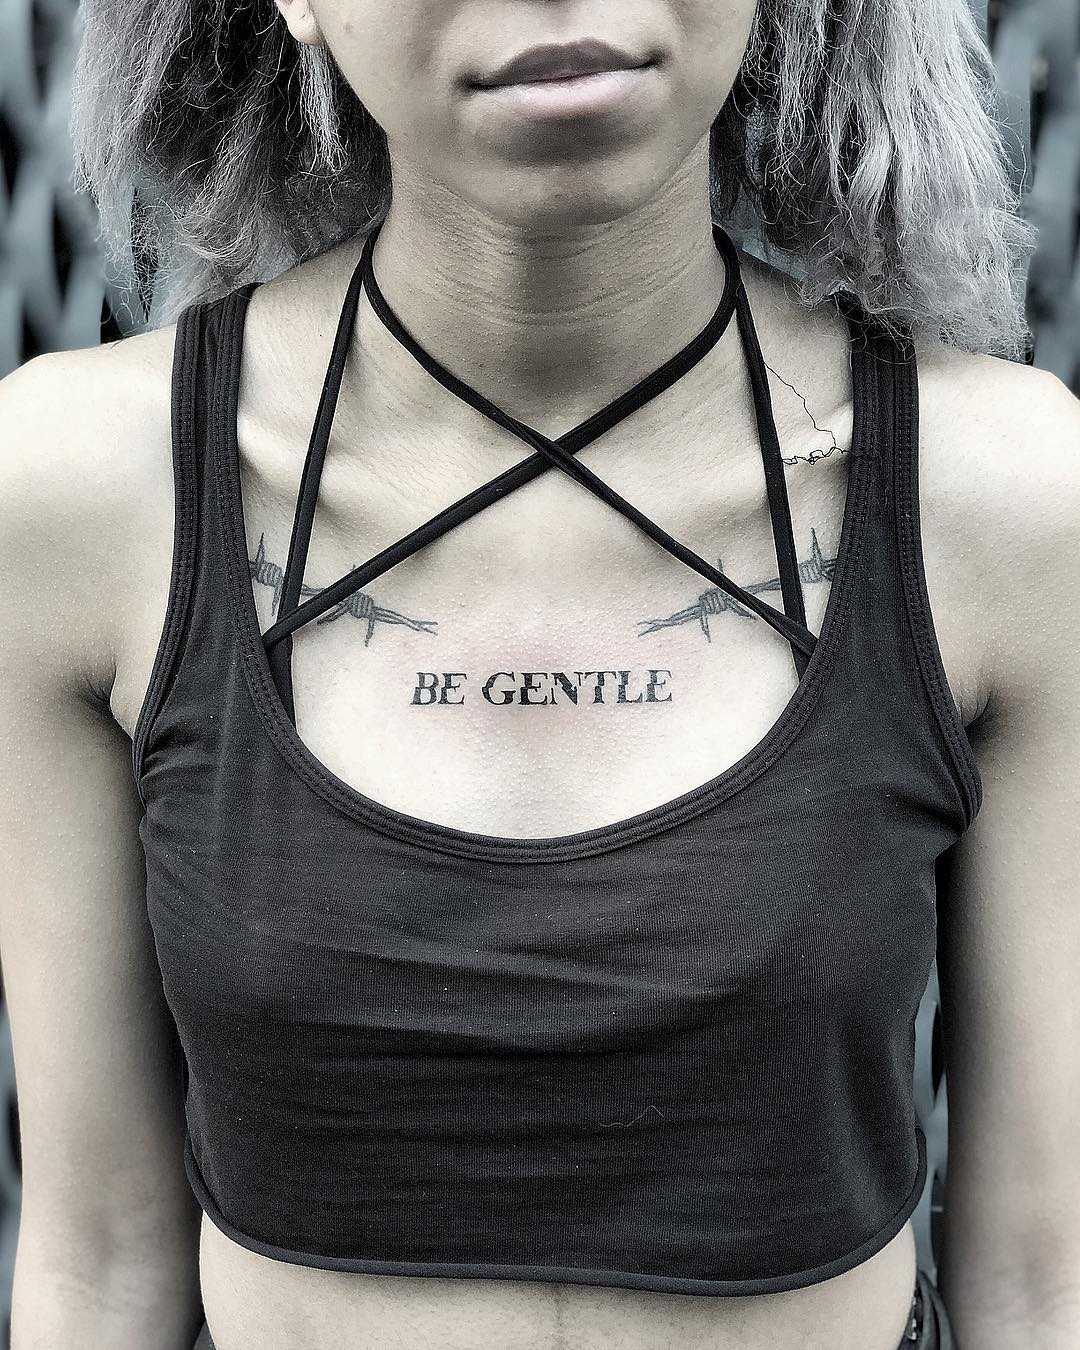 Be gentle tattoo by Loz McLean